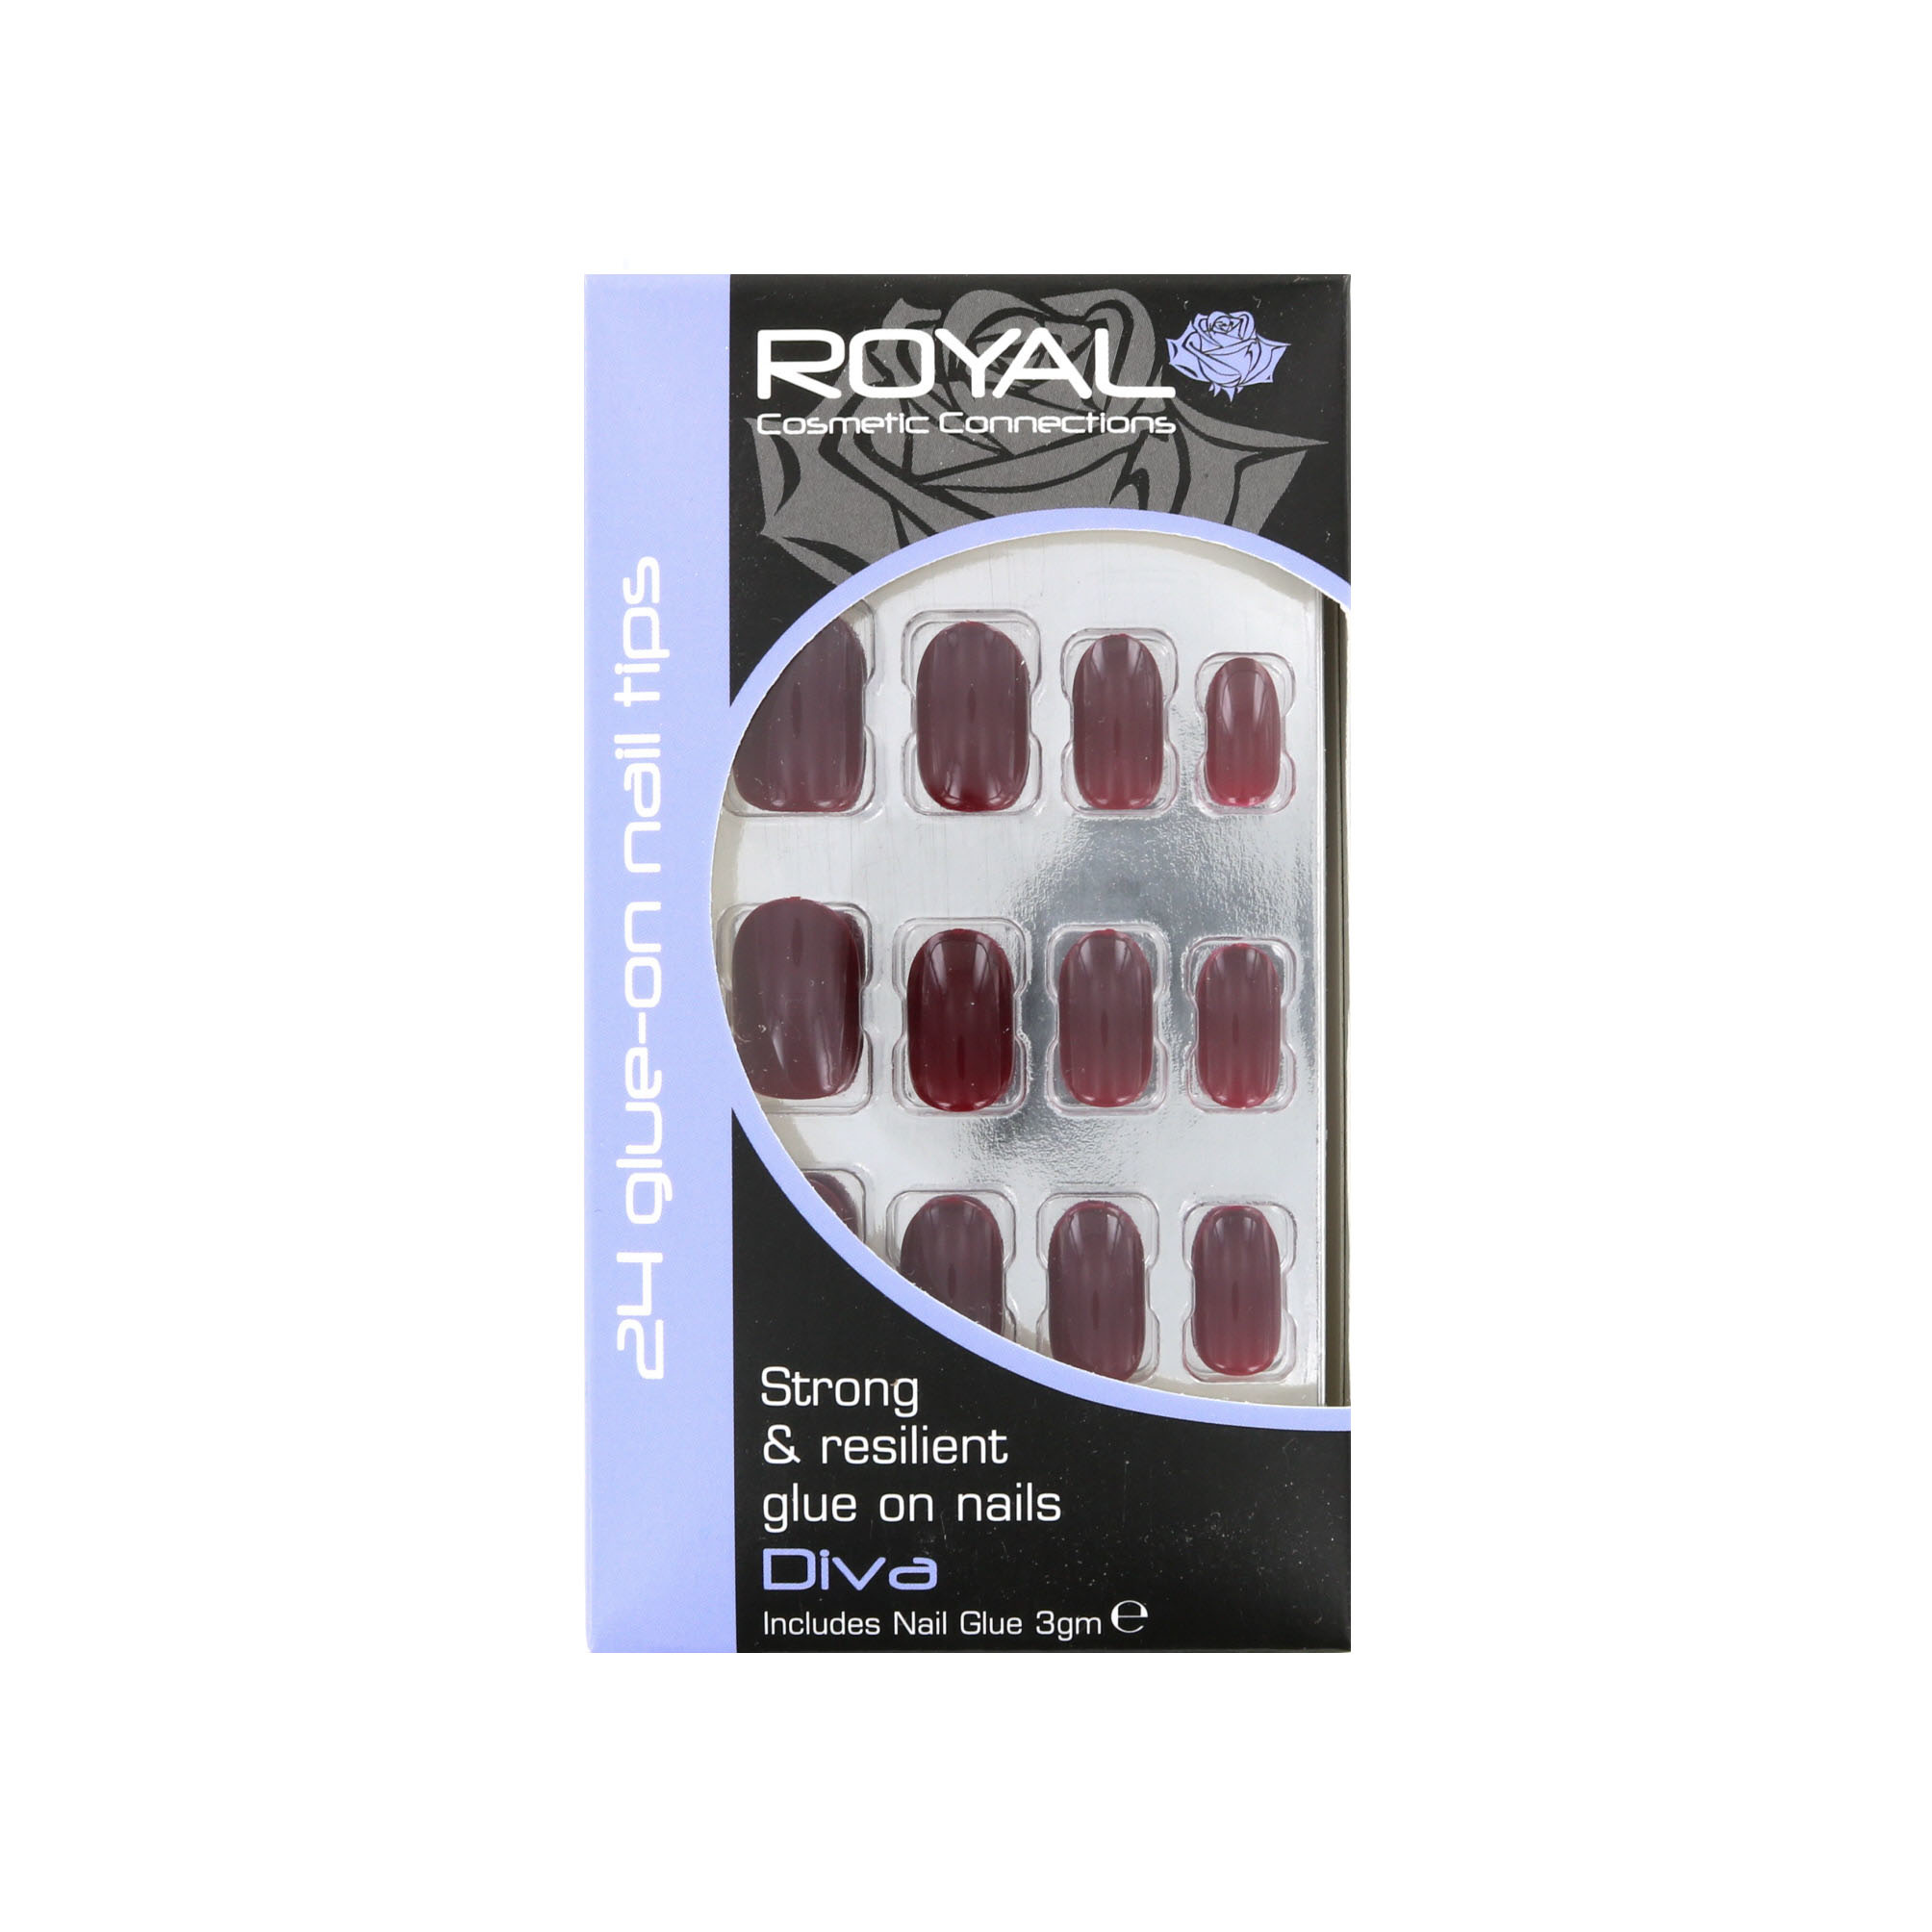 Royal 24 Glue-On - Diamond Diva (met nagellijm) kopen